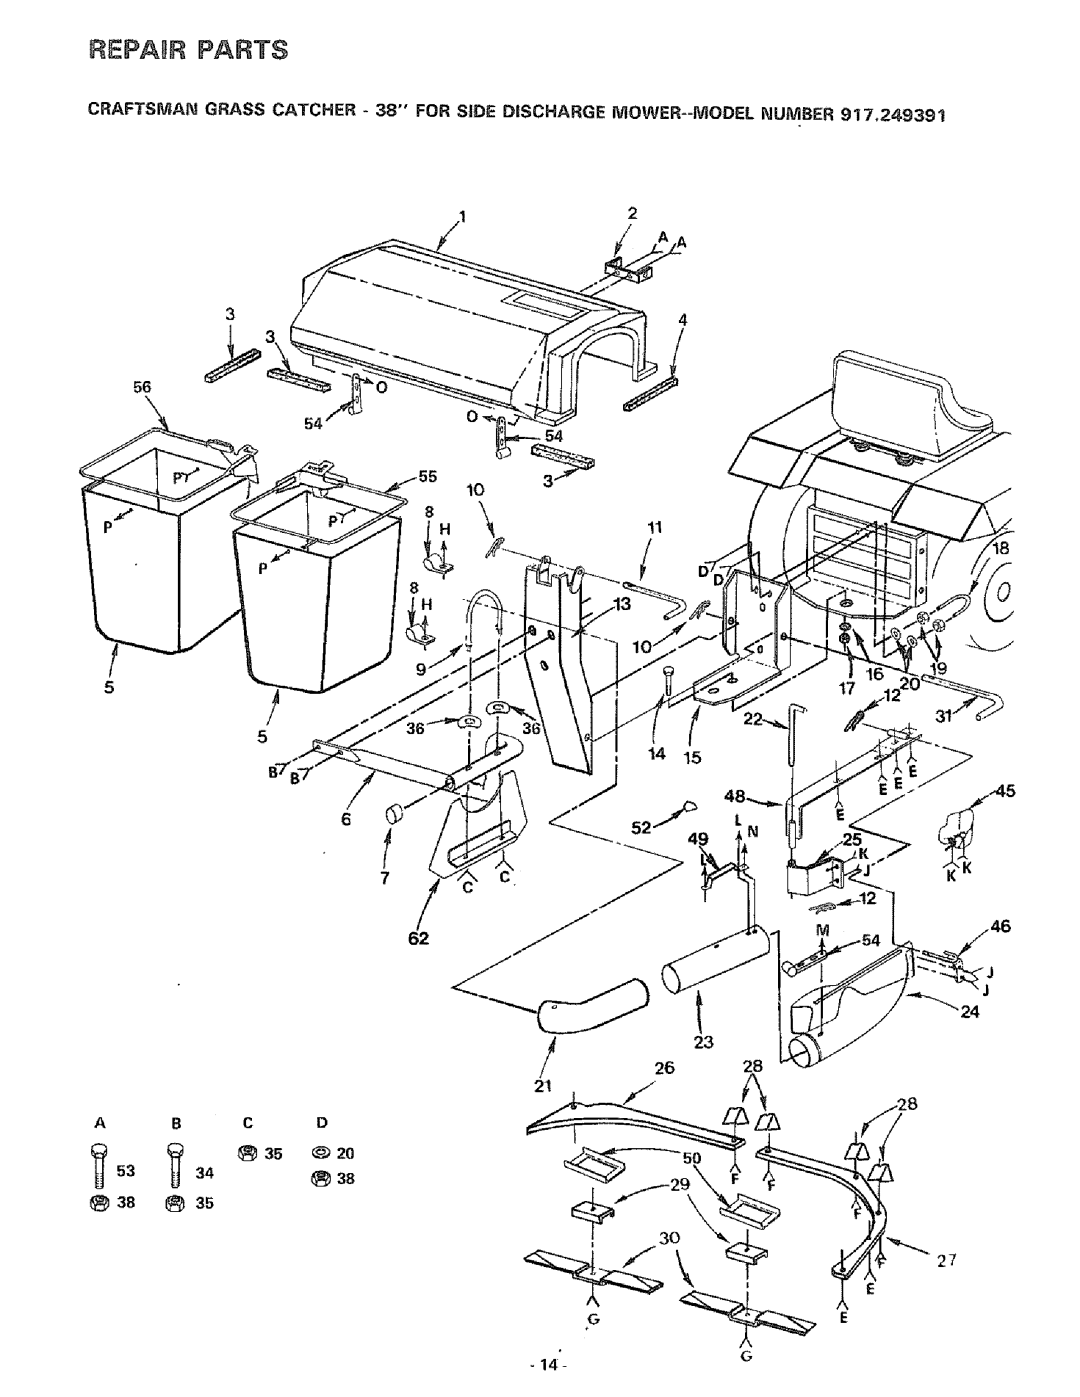 Sears 917.249391 manual Repabr Parts, @38 @ 